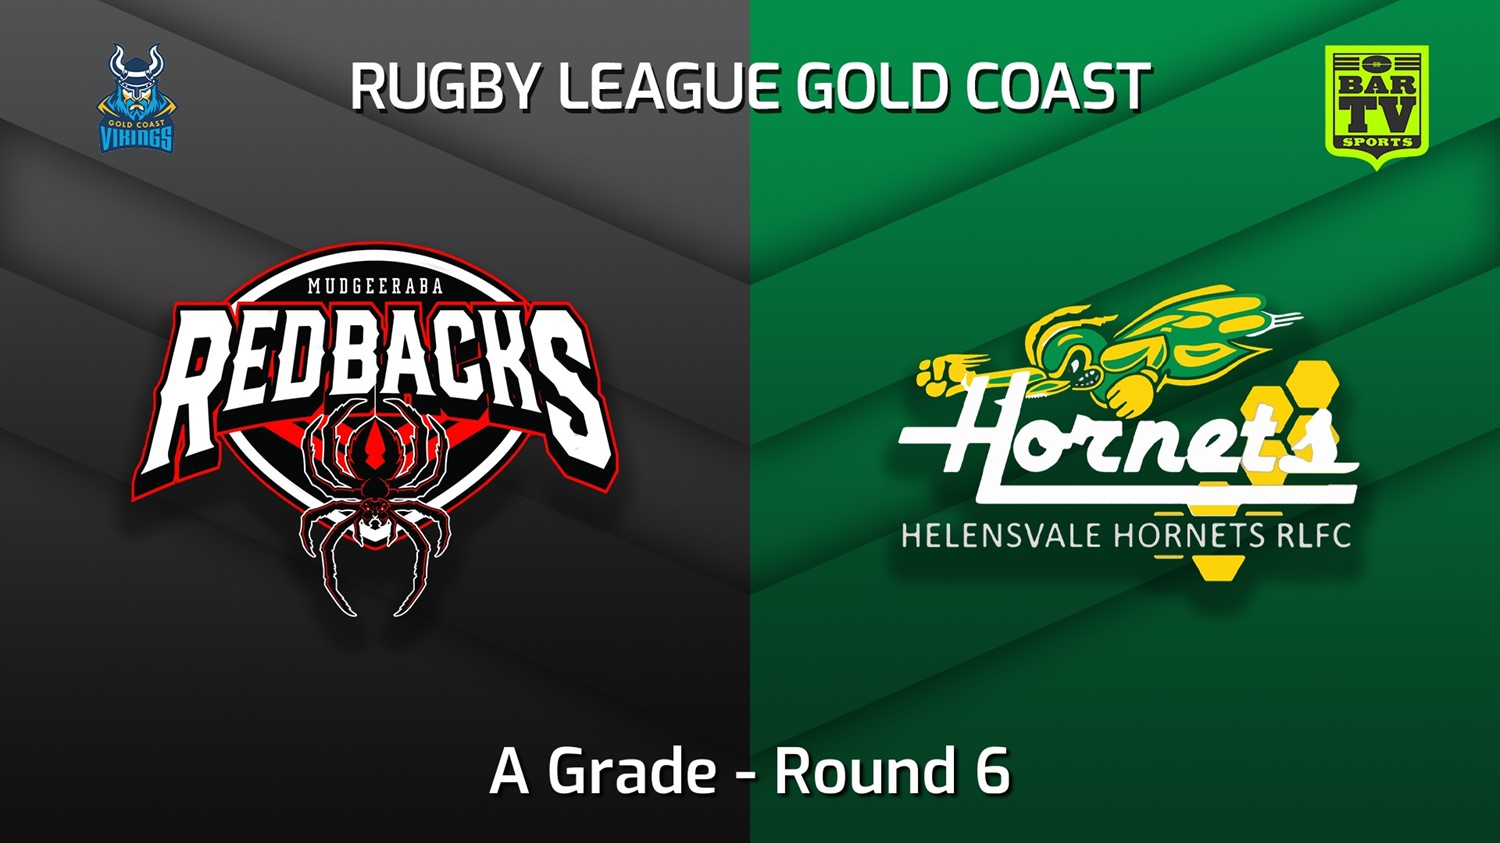 220515-Gold Coast Round 6 - A Grade - Mudgeeraba Redbacks v Helensvale Hornets Slate Image